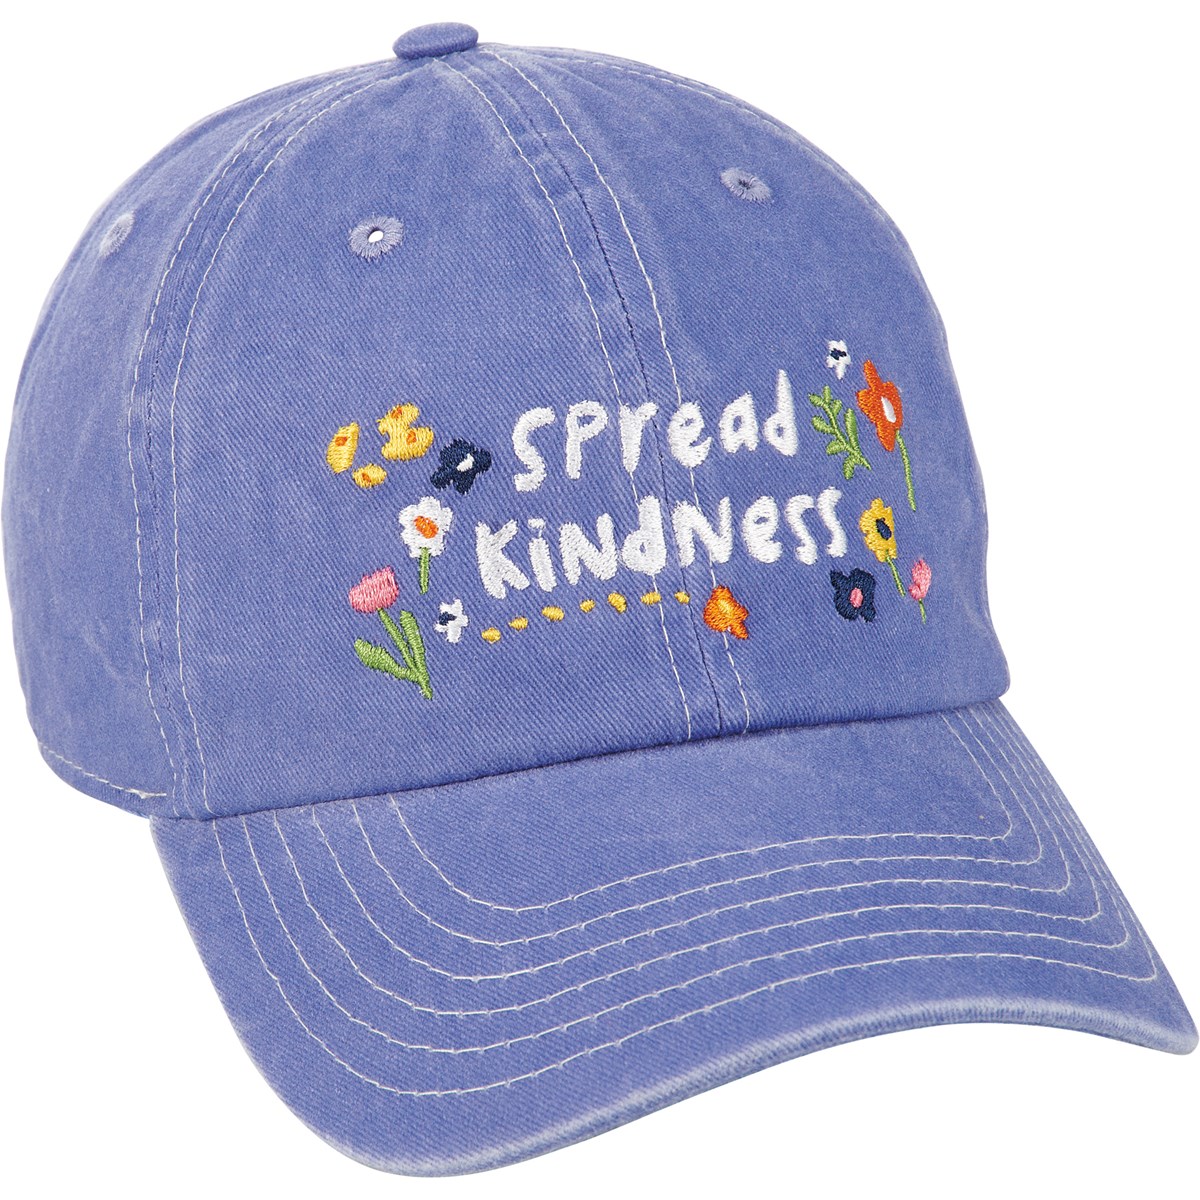 Spread Kindness Baseball Cap - Cotton, Metal